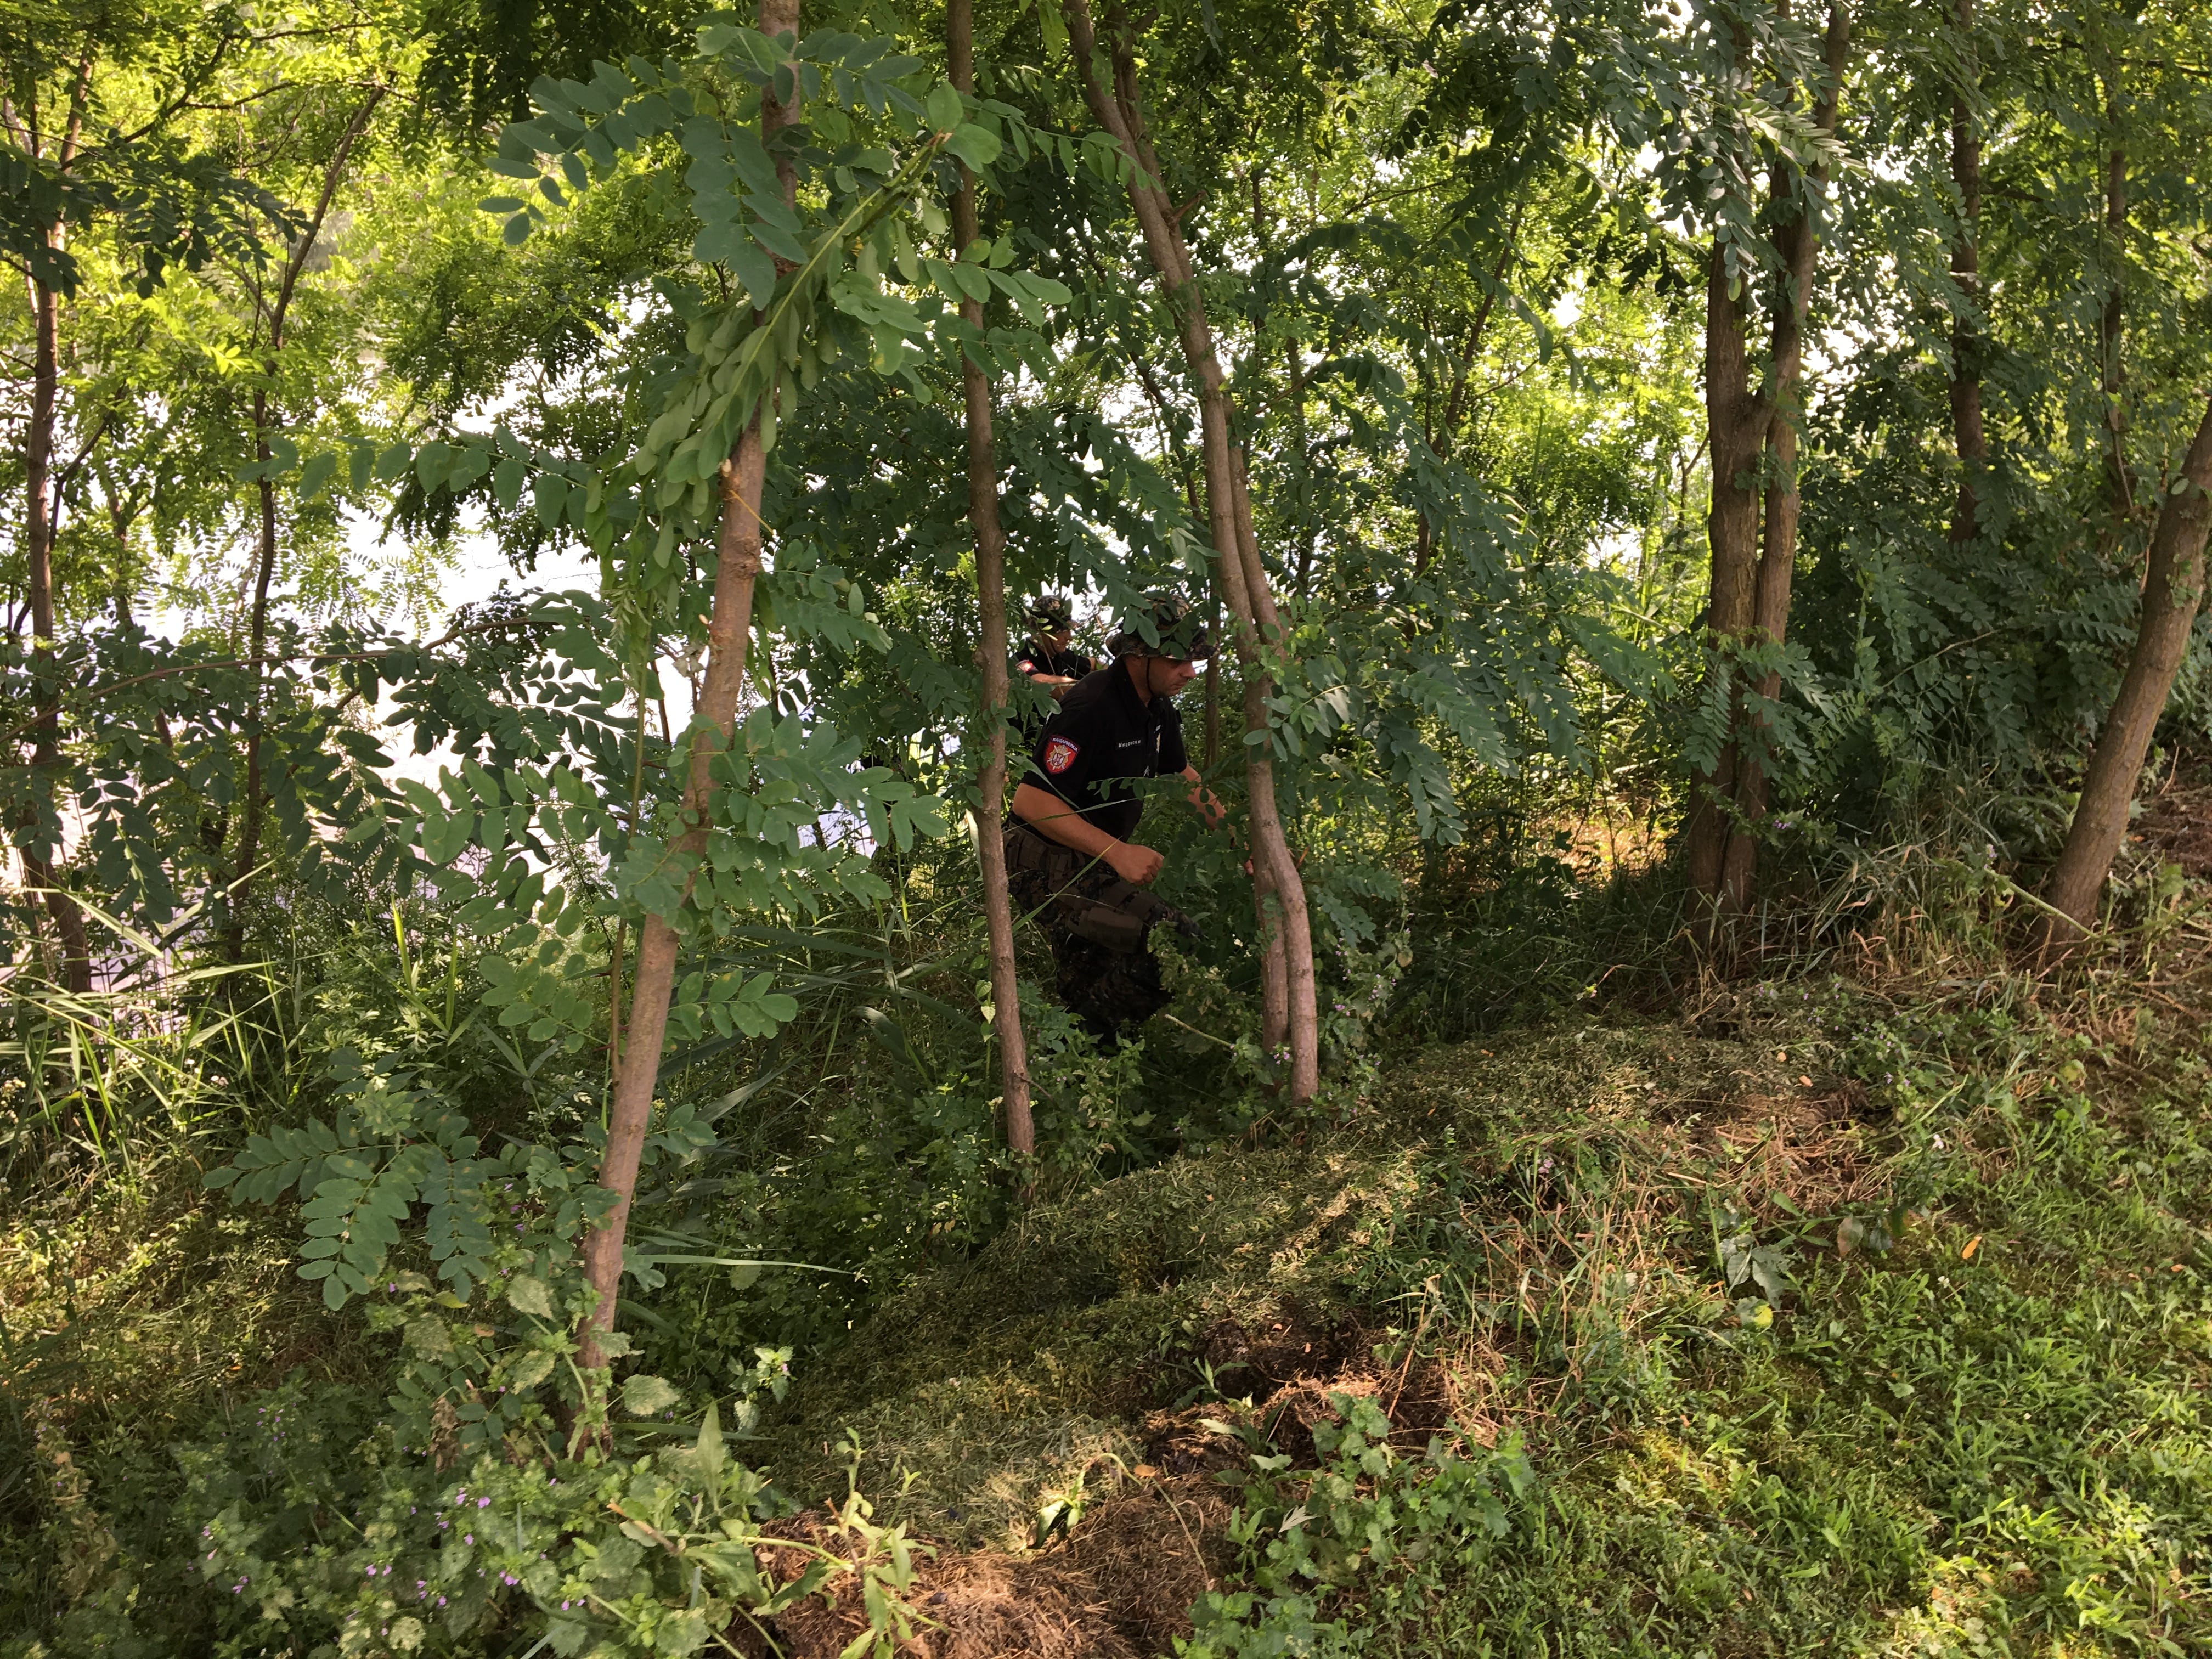 Policija pretražuje teren oko mesta gde je nađeno Cvetkovićevo vozilo